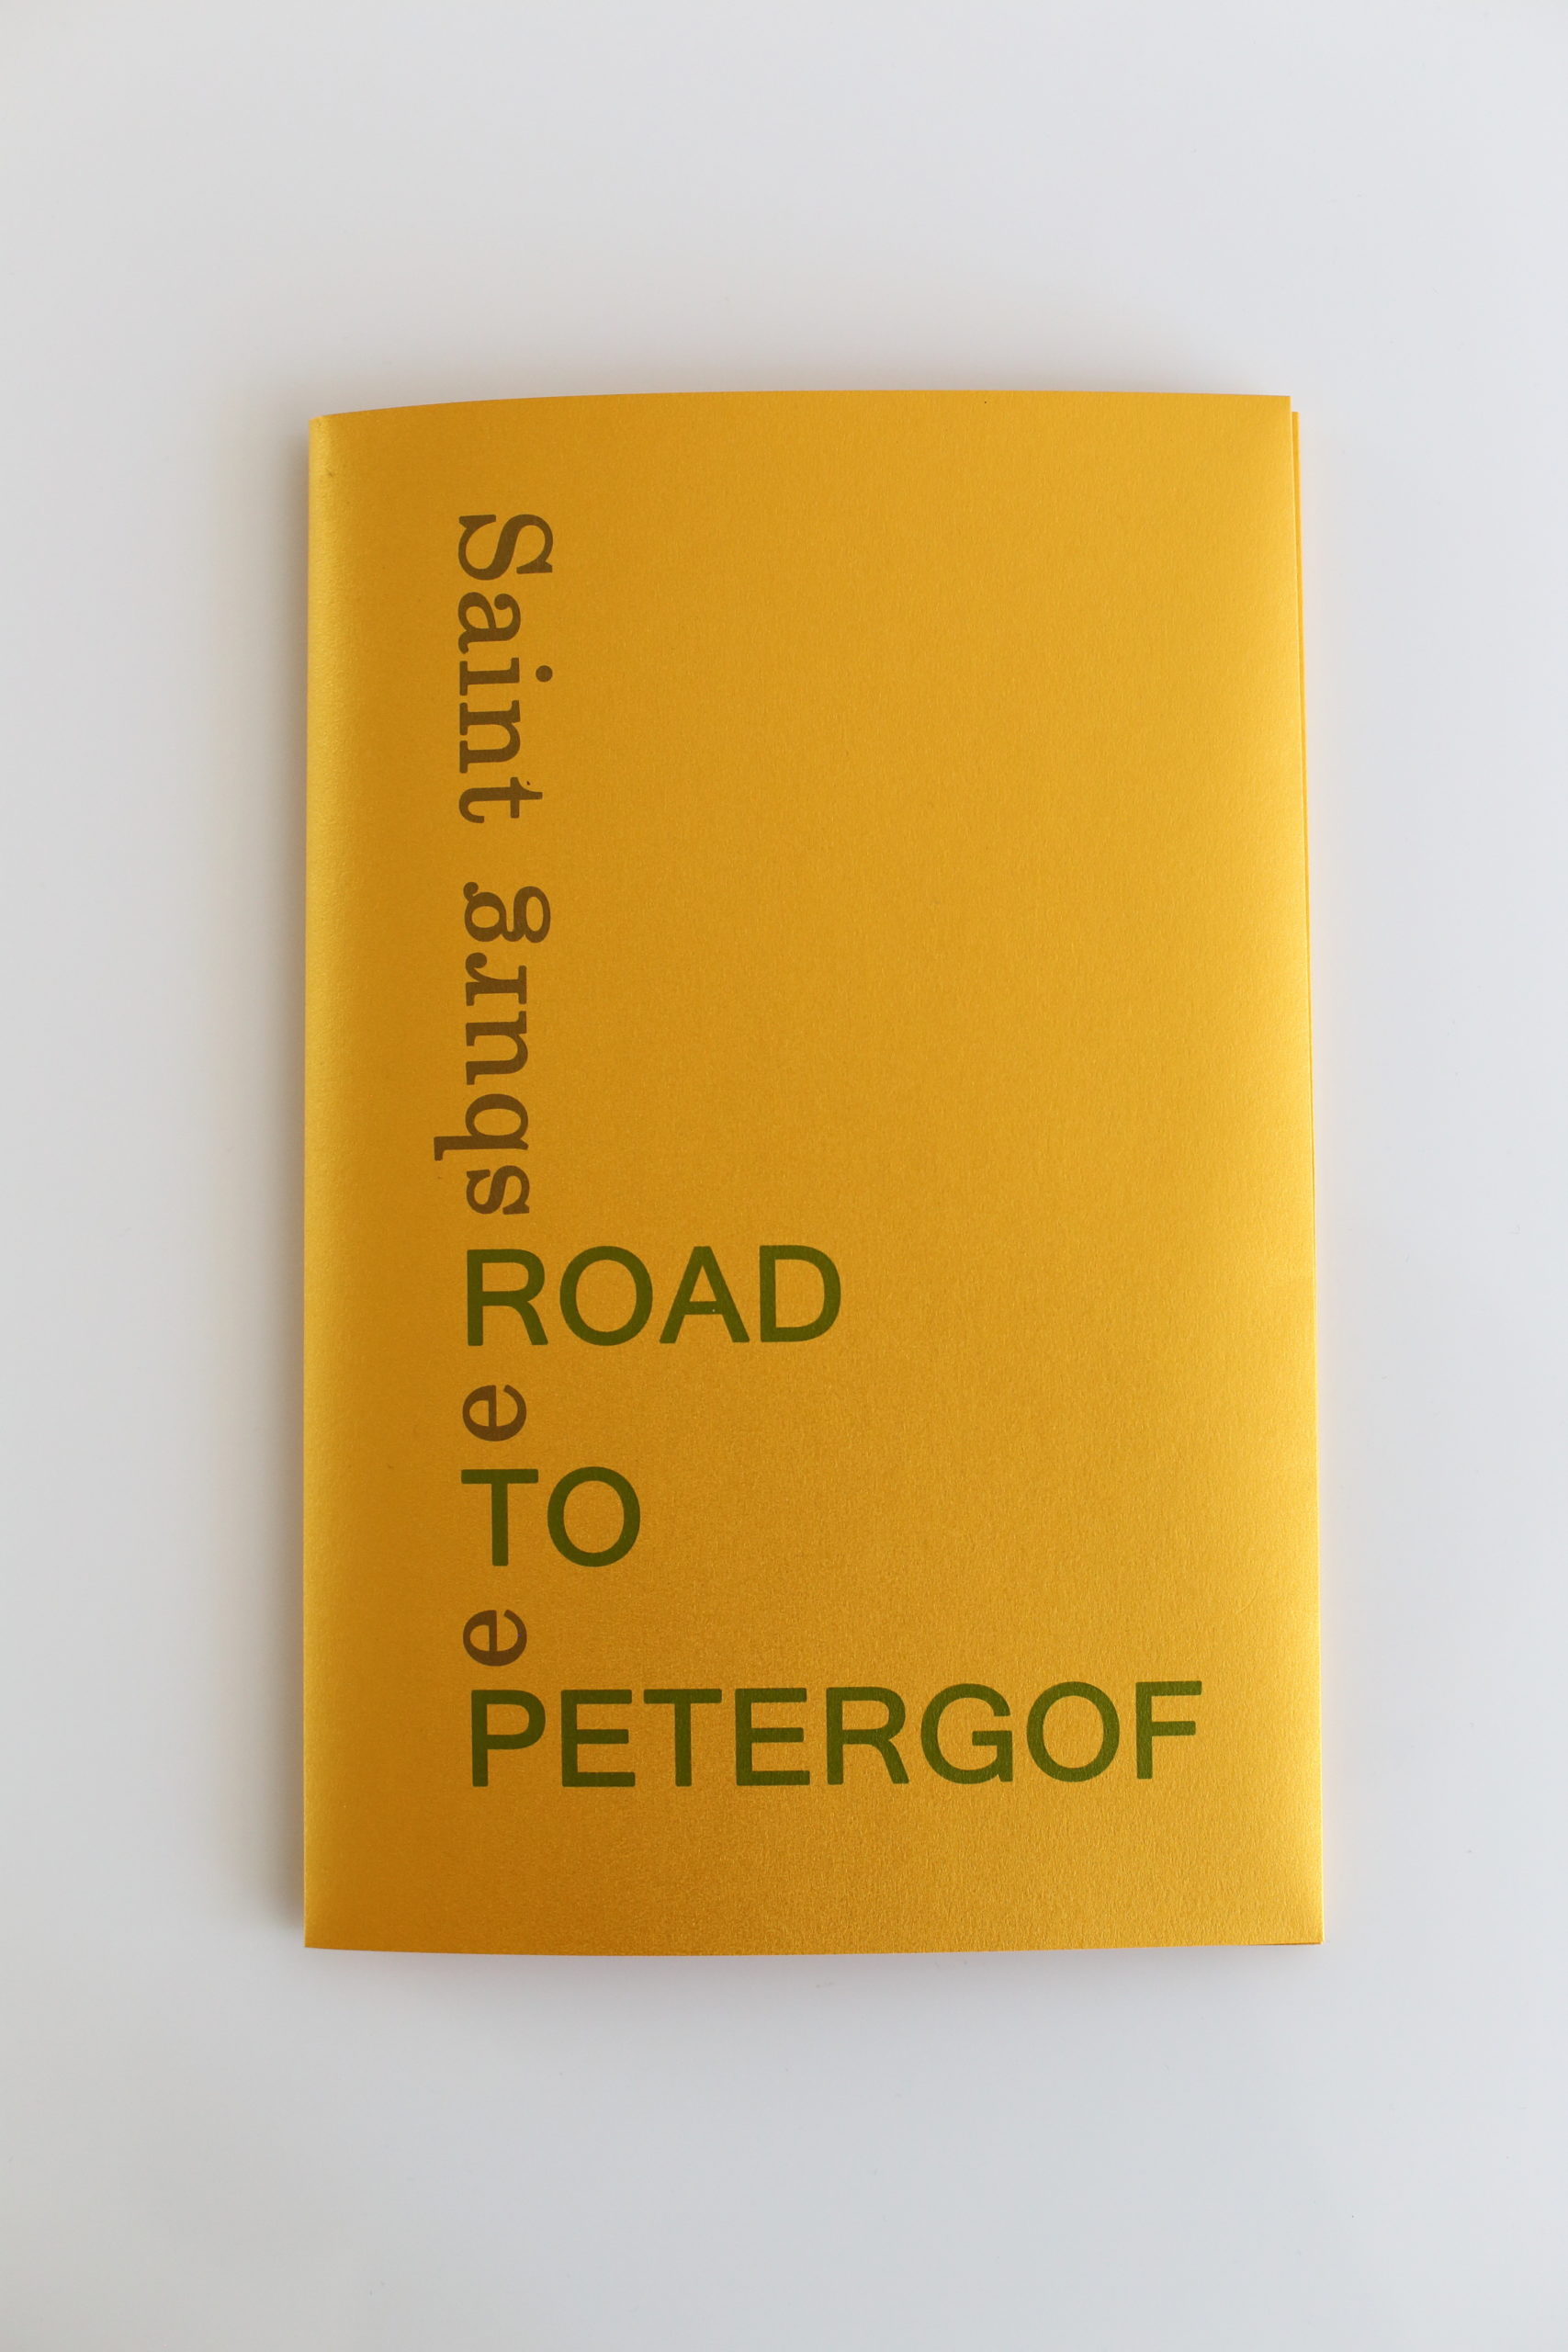 Saint Petersburg: Road to Petergof